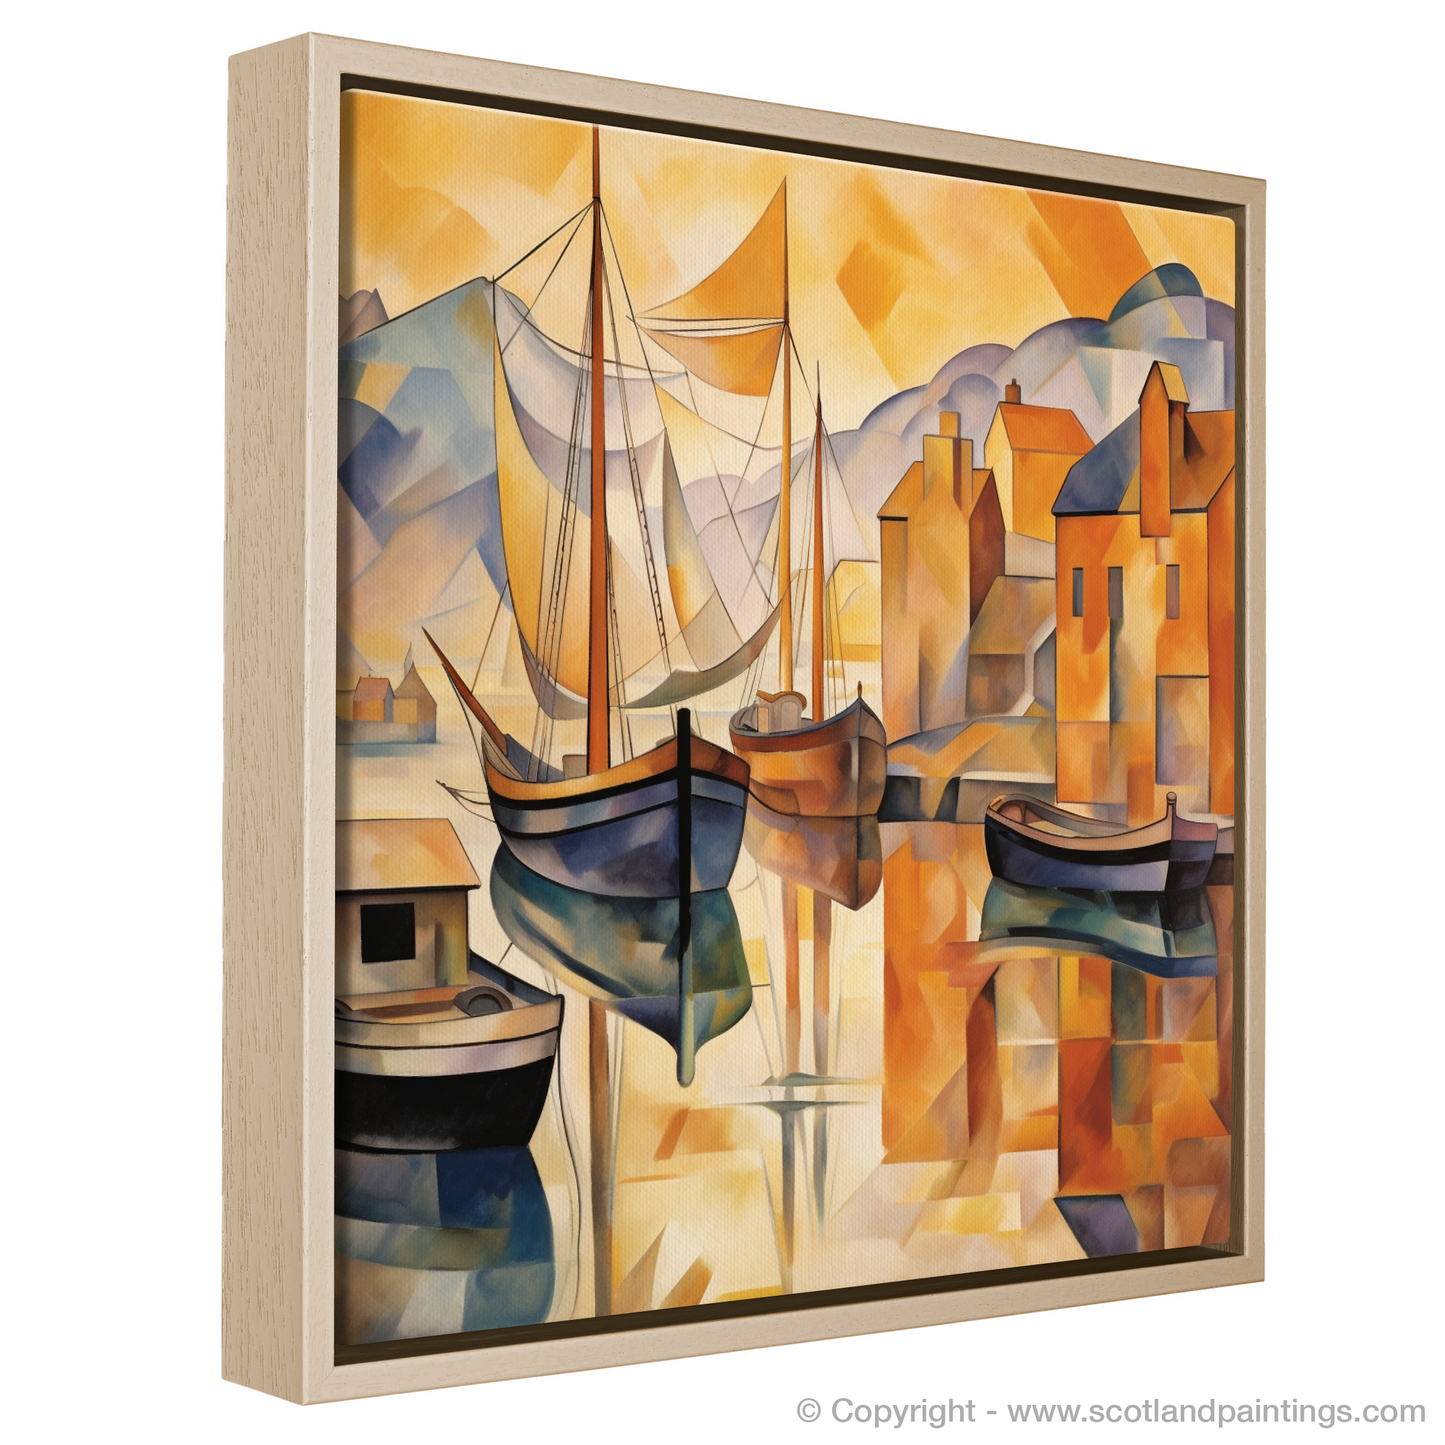 Golden Hour Geometrics: A Cubist Vision of Ullapool Harbour